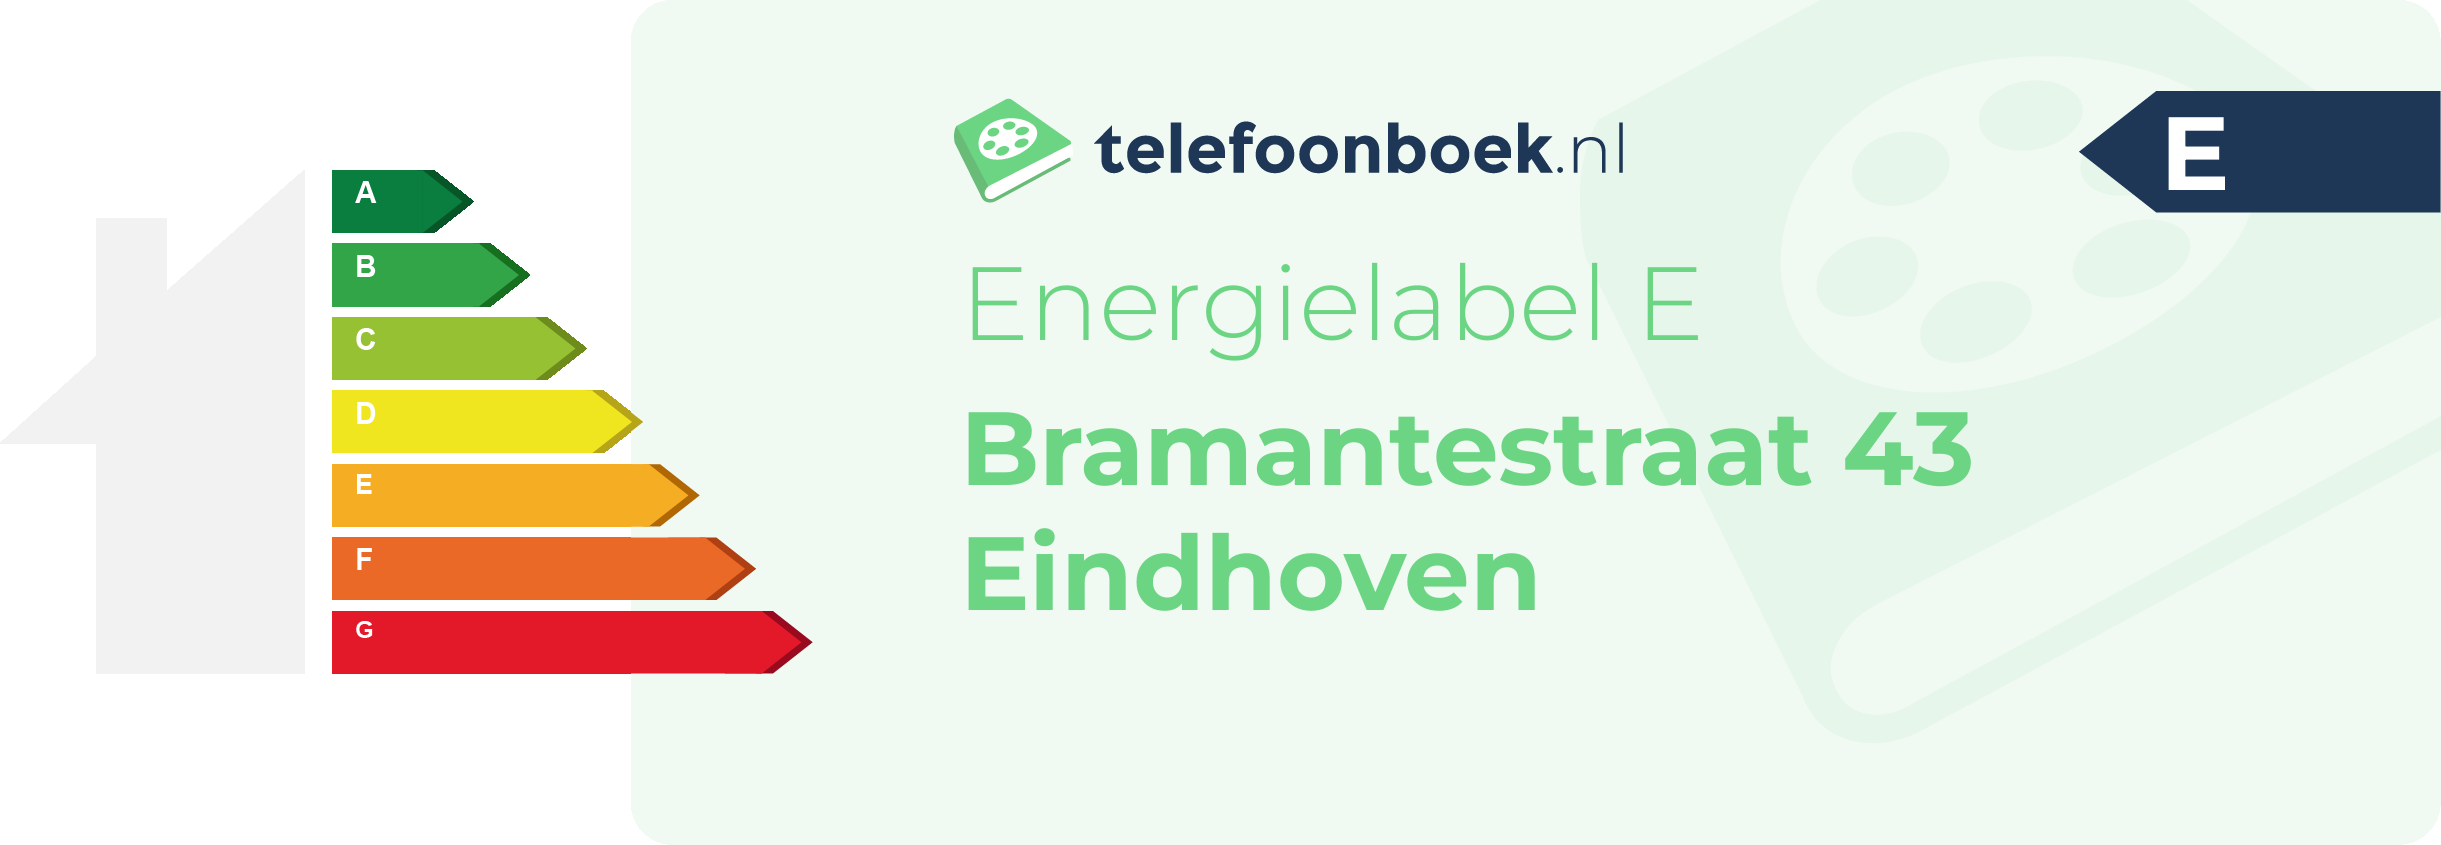 Energielabel Bramantestraat 43 Eindhoven